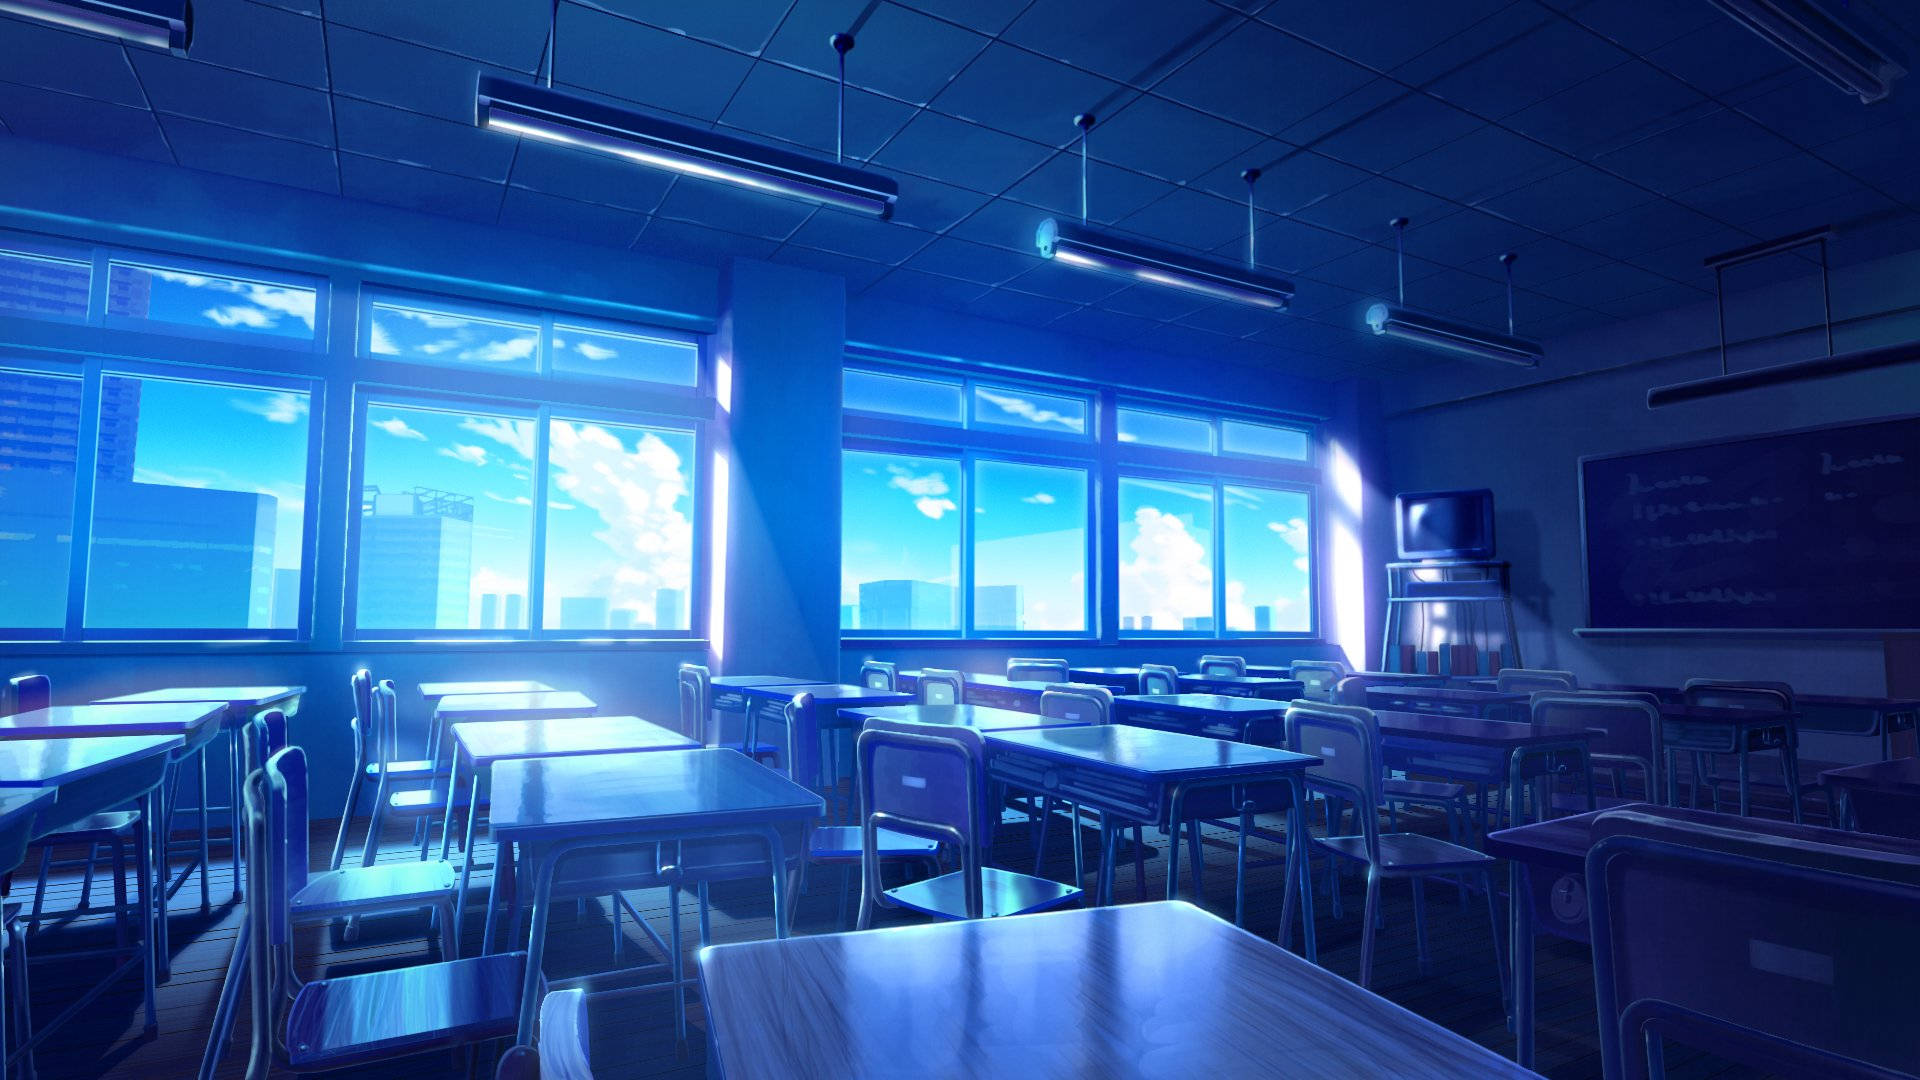 Blue Lighting On Anime Classroom Wallpaper